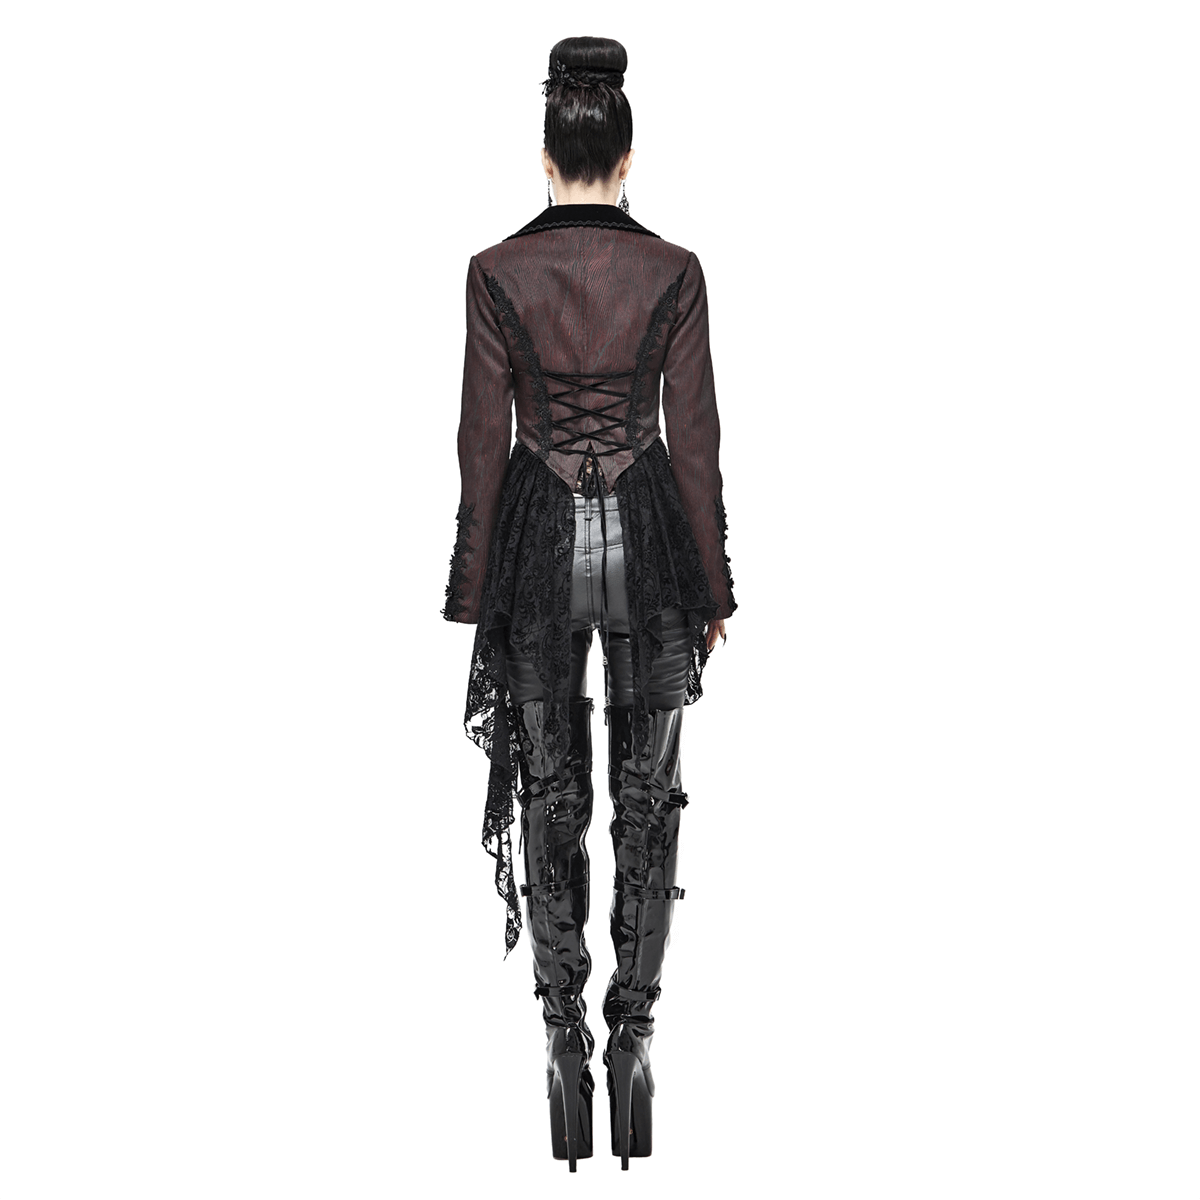 Women's Gothic Flare Sleeve Lace Splice Wine Red Coat / Alternative Style Outerwear - HARD'N'HEAVY